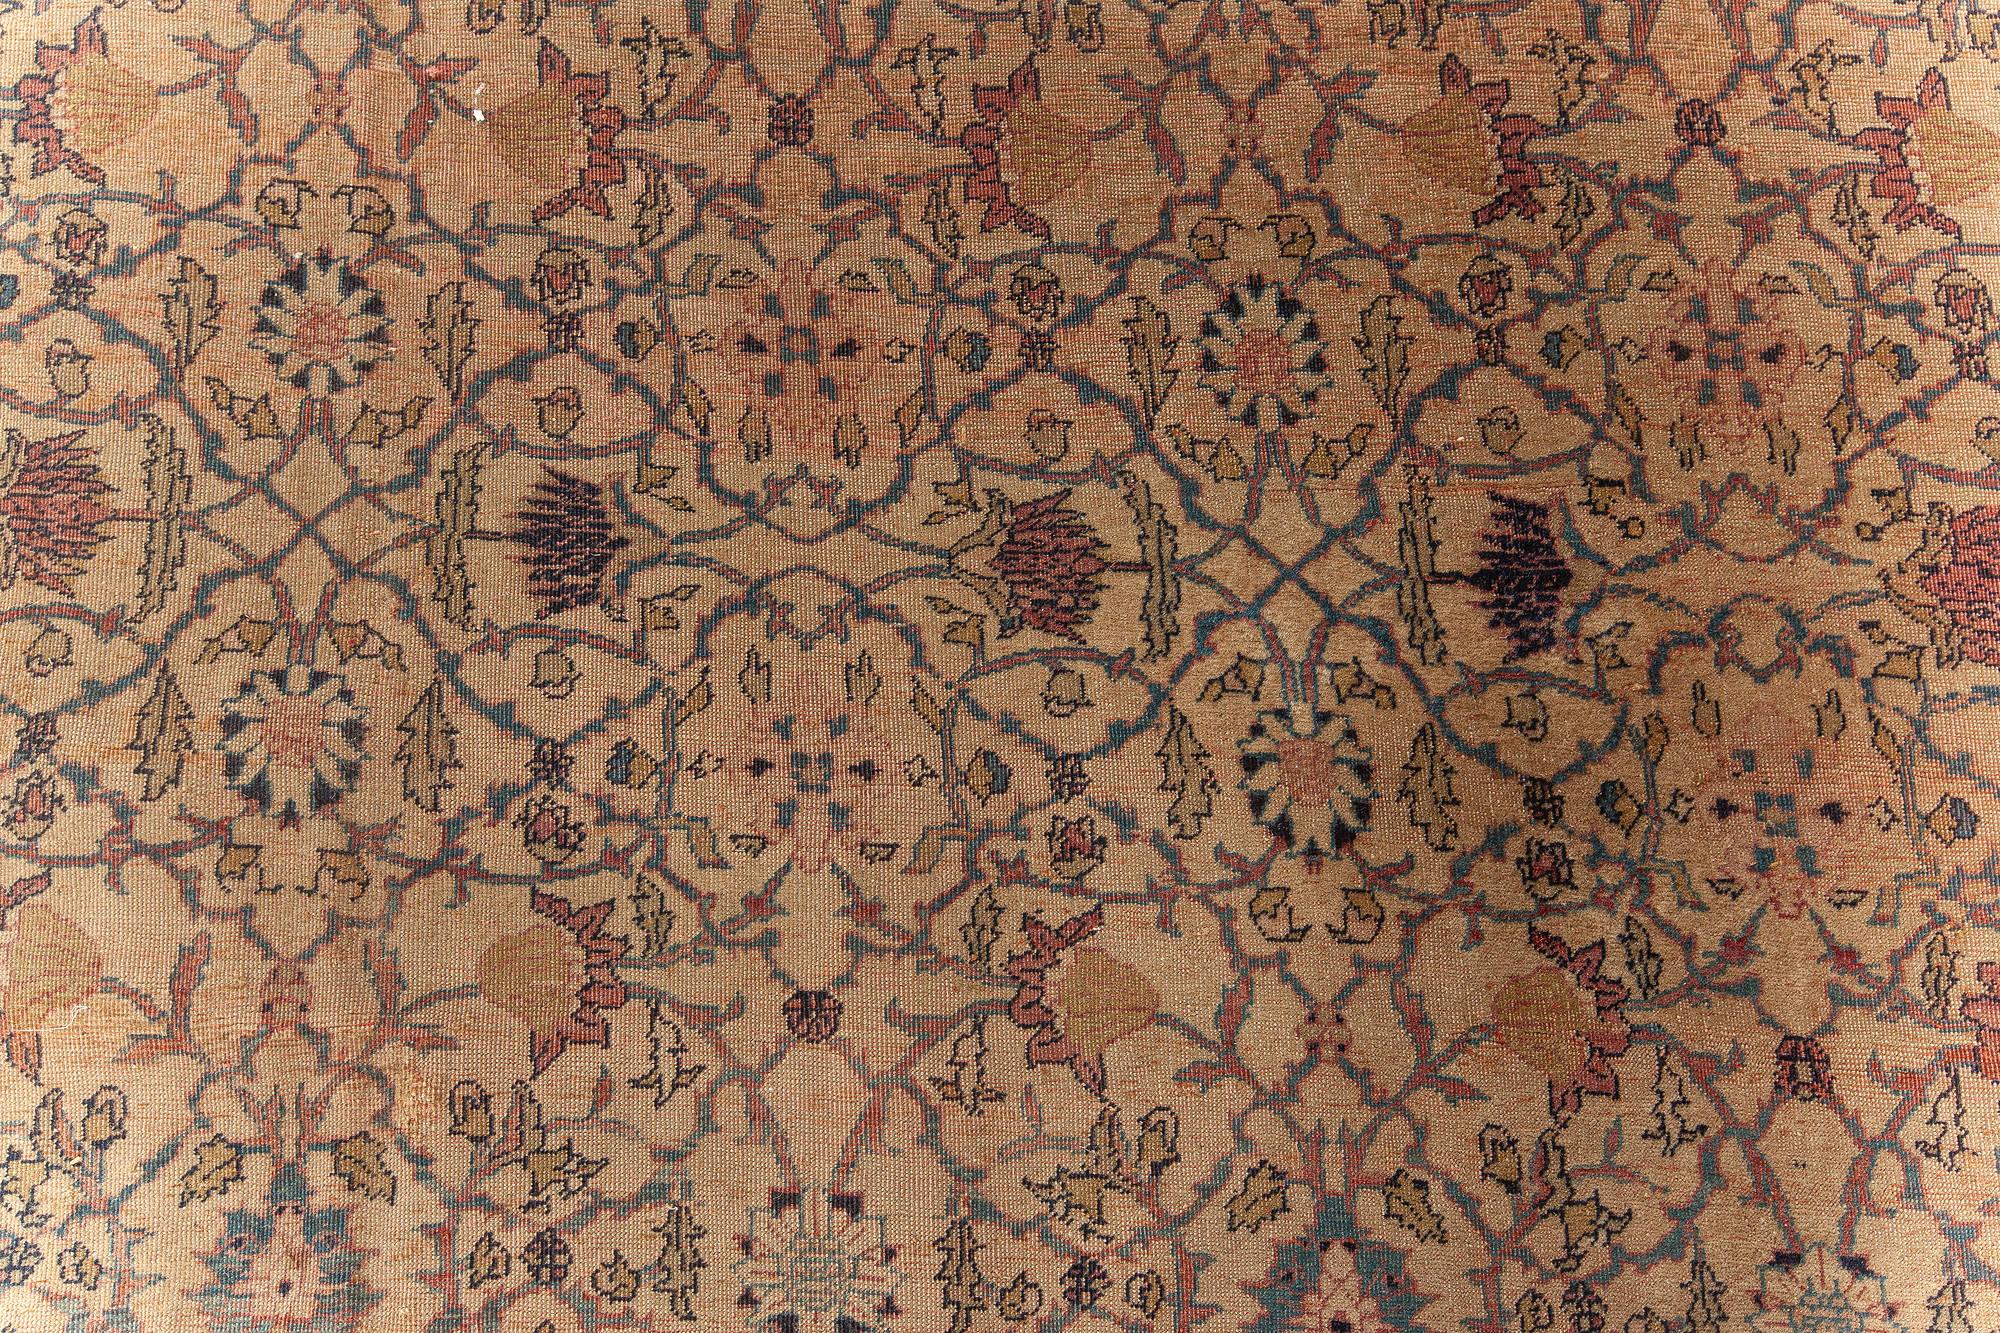 Athentic Turkish Sivas handmade wool rug
Size: 13'2